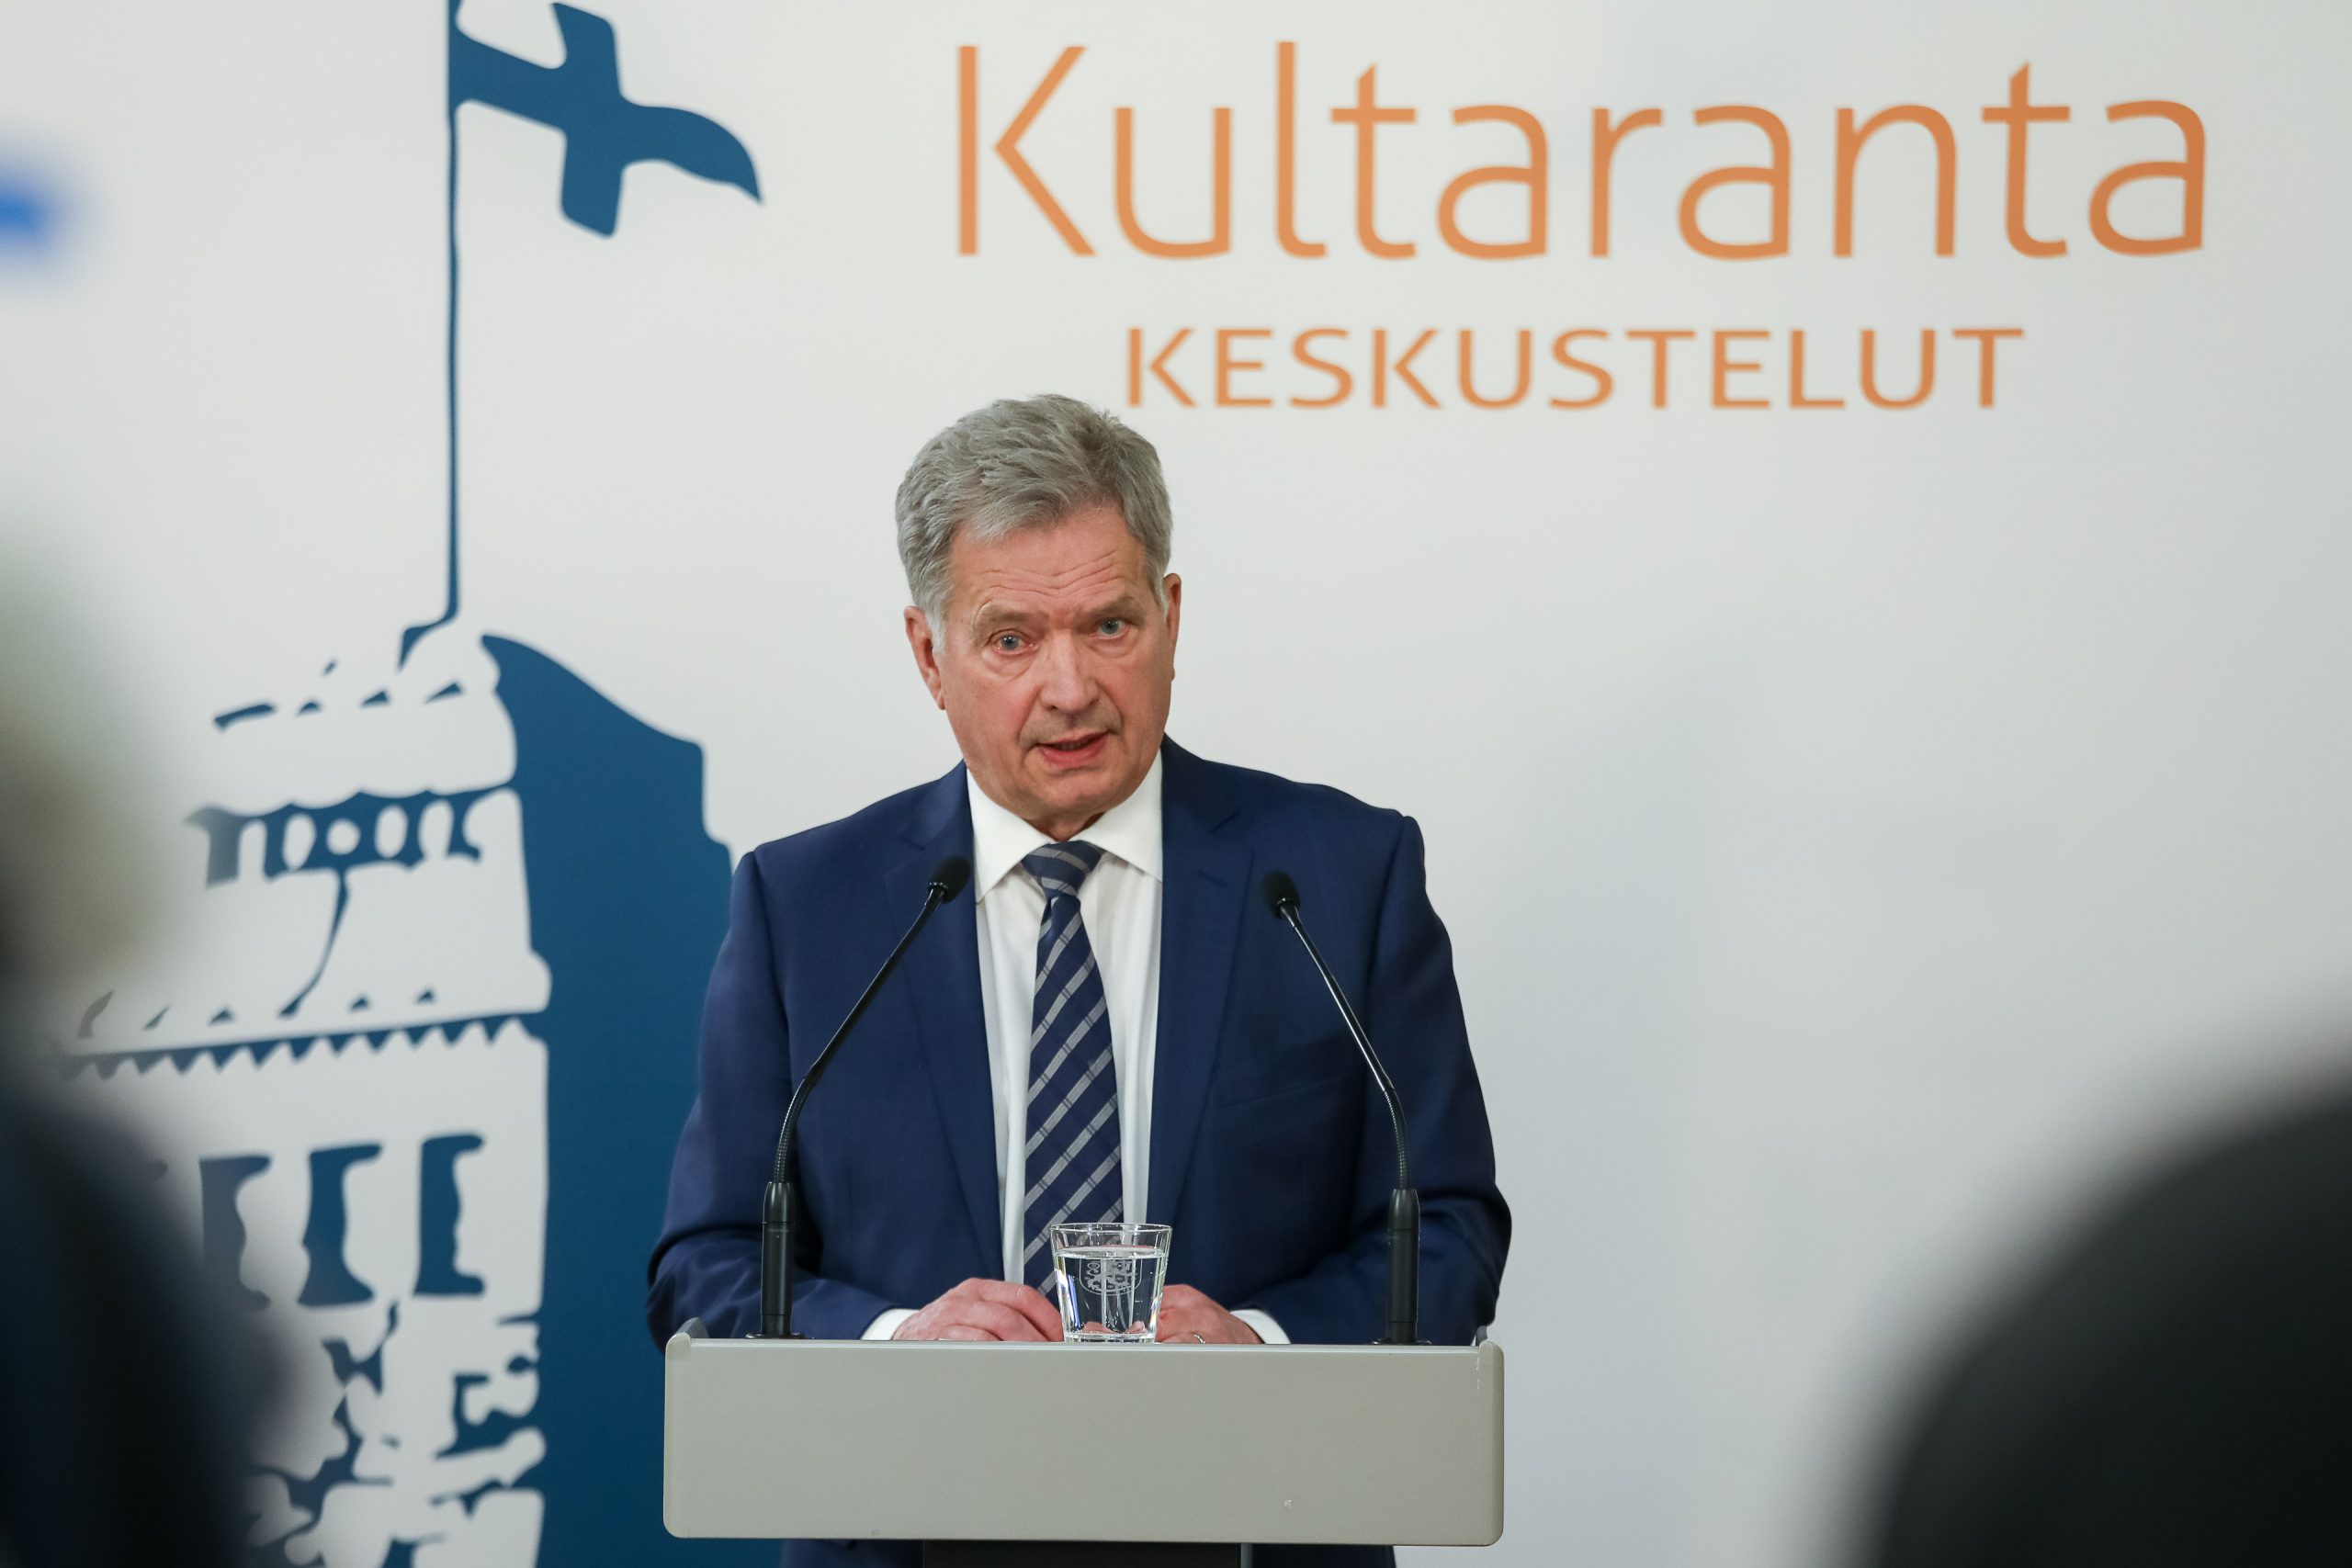 Finland's 2022 Kultaranta talks kick off today